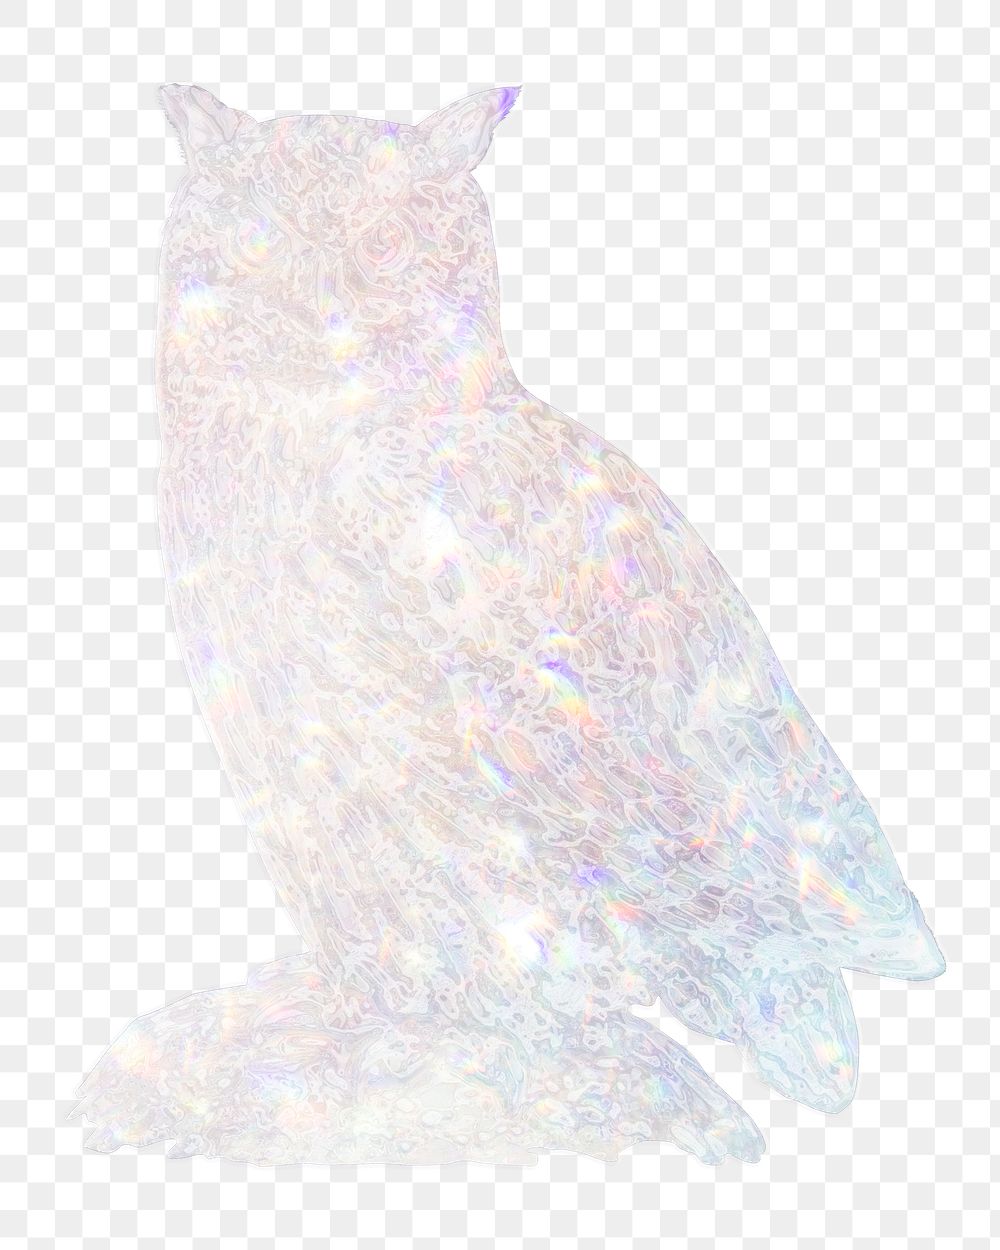 Silvery holographic Eurasian eagle-owl design element